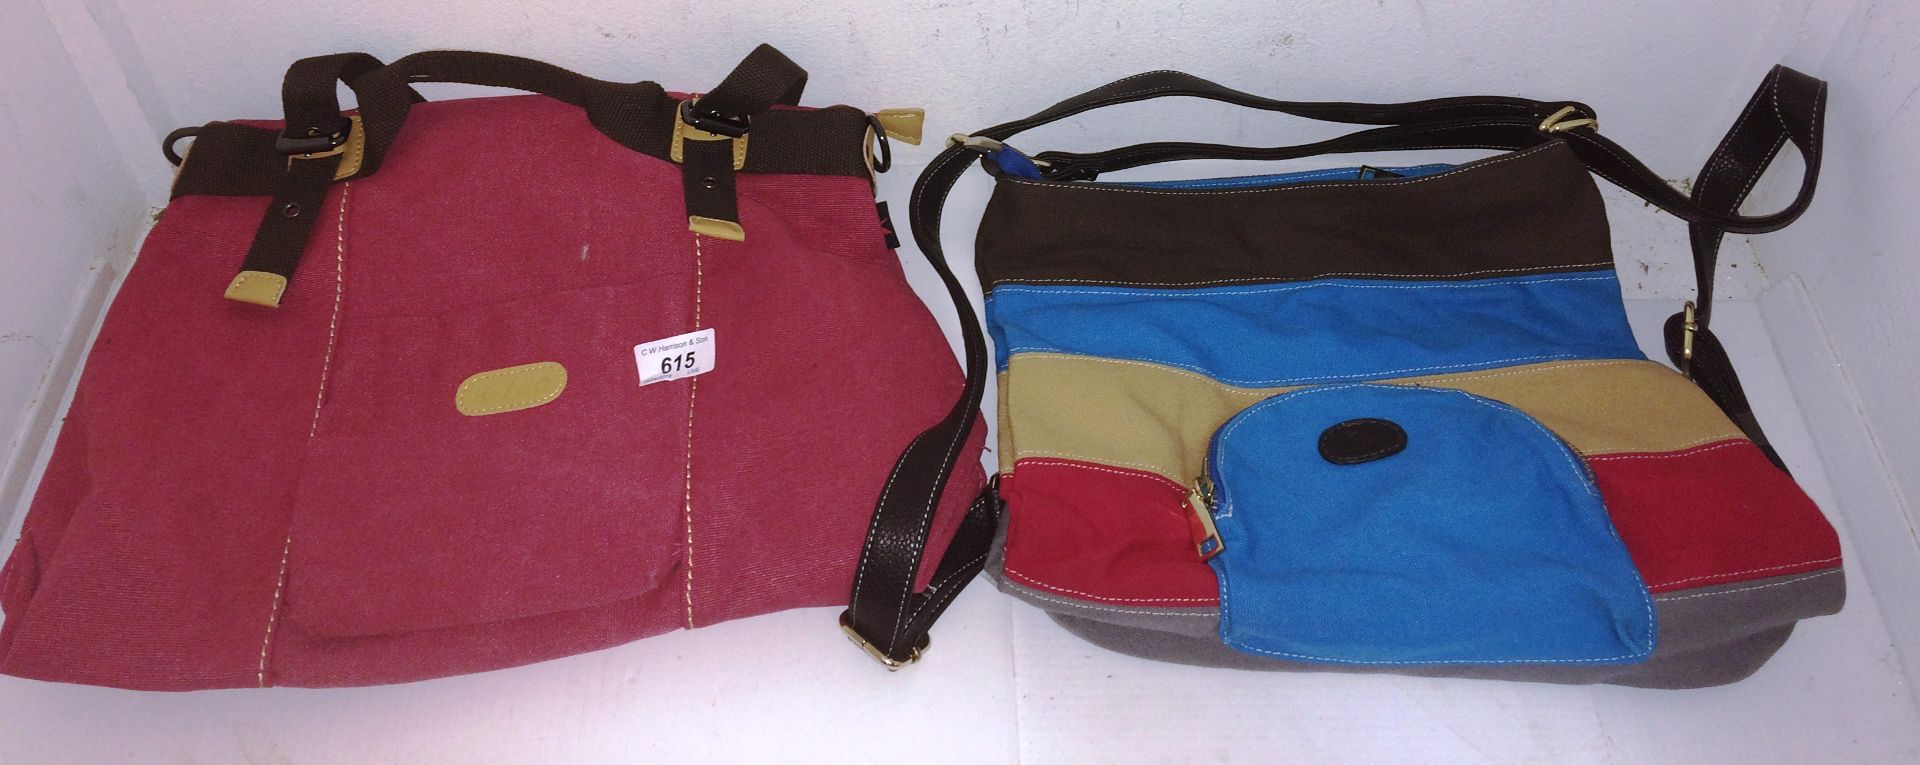 2 x items - Kiss-Gold pink canvas handbag and a blue/red canvas handbag